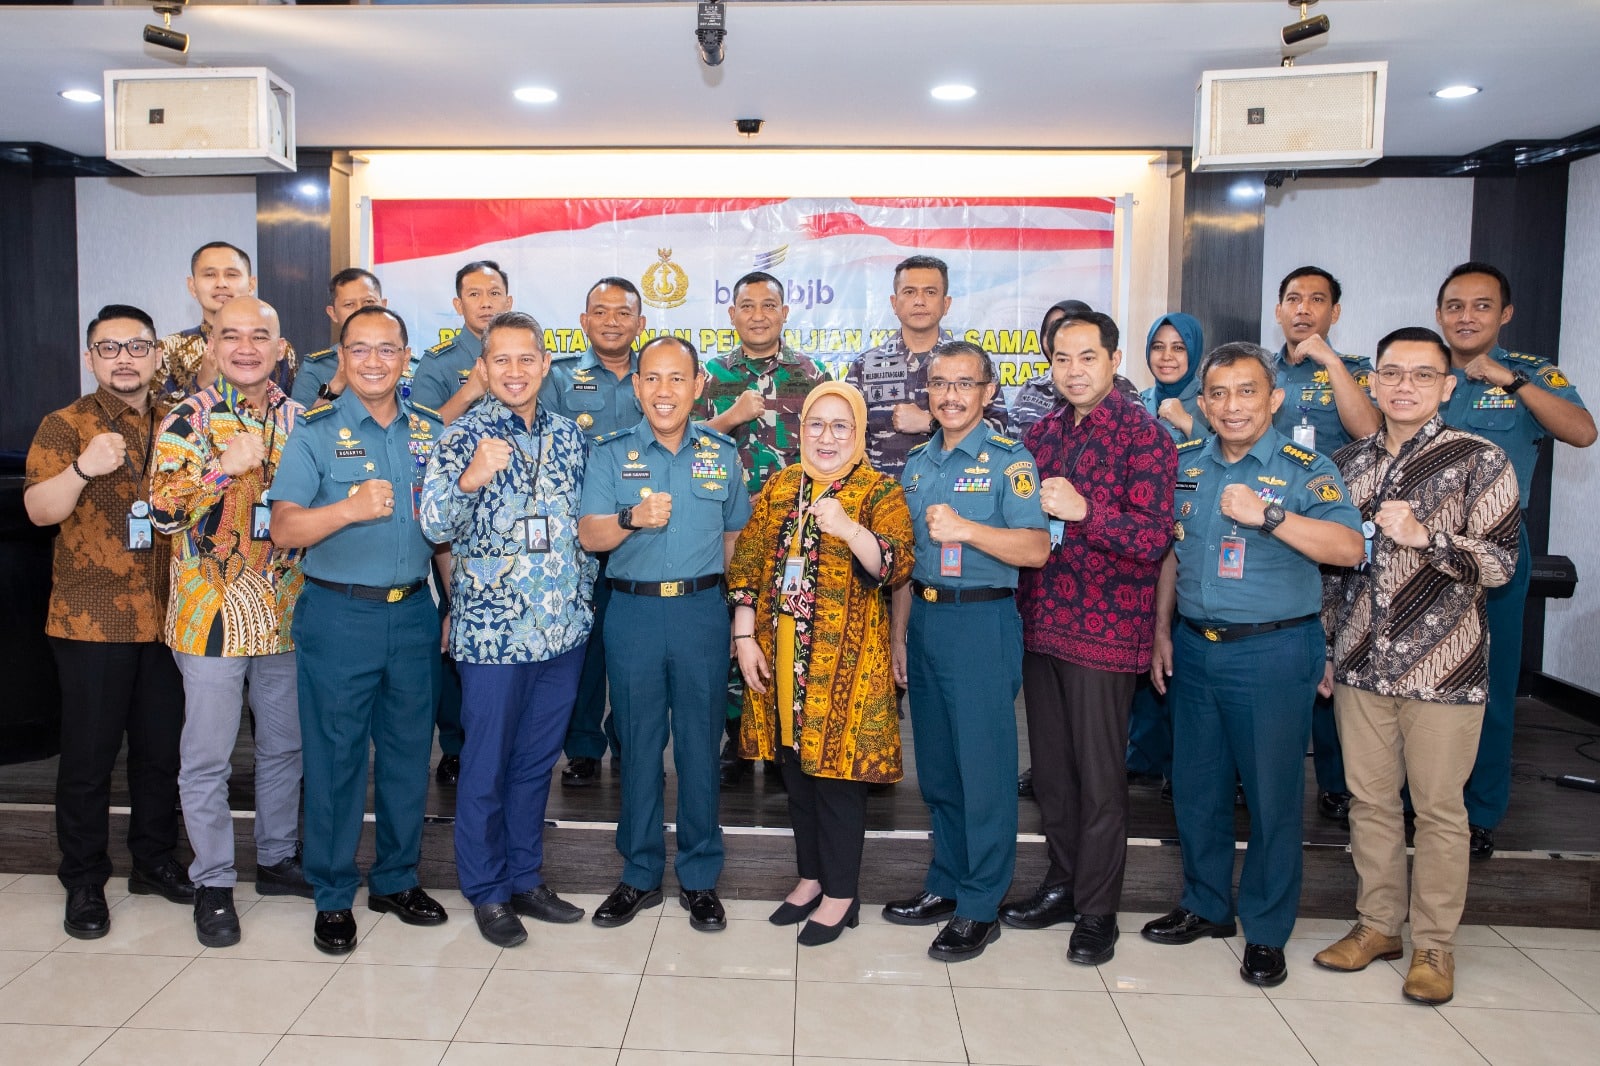 Foto bersama usai penandatanganan PKS antara bank bjb bersama TNI AL. (Foto: bank bjb)